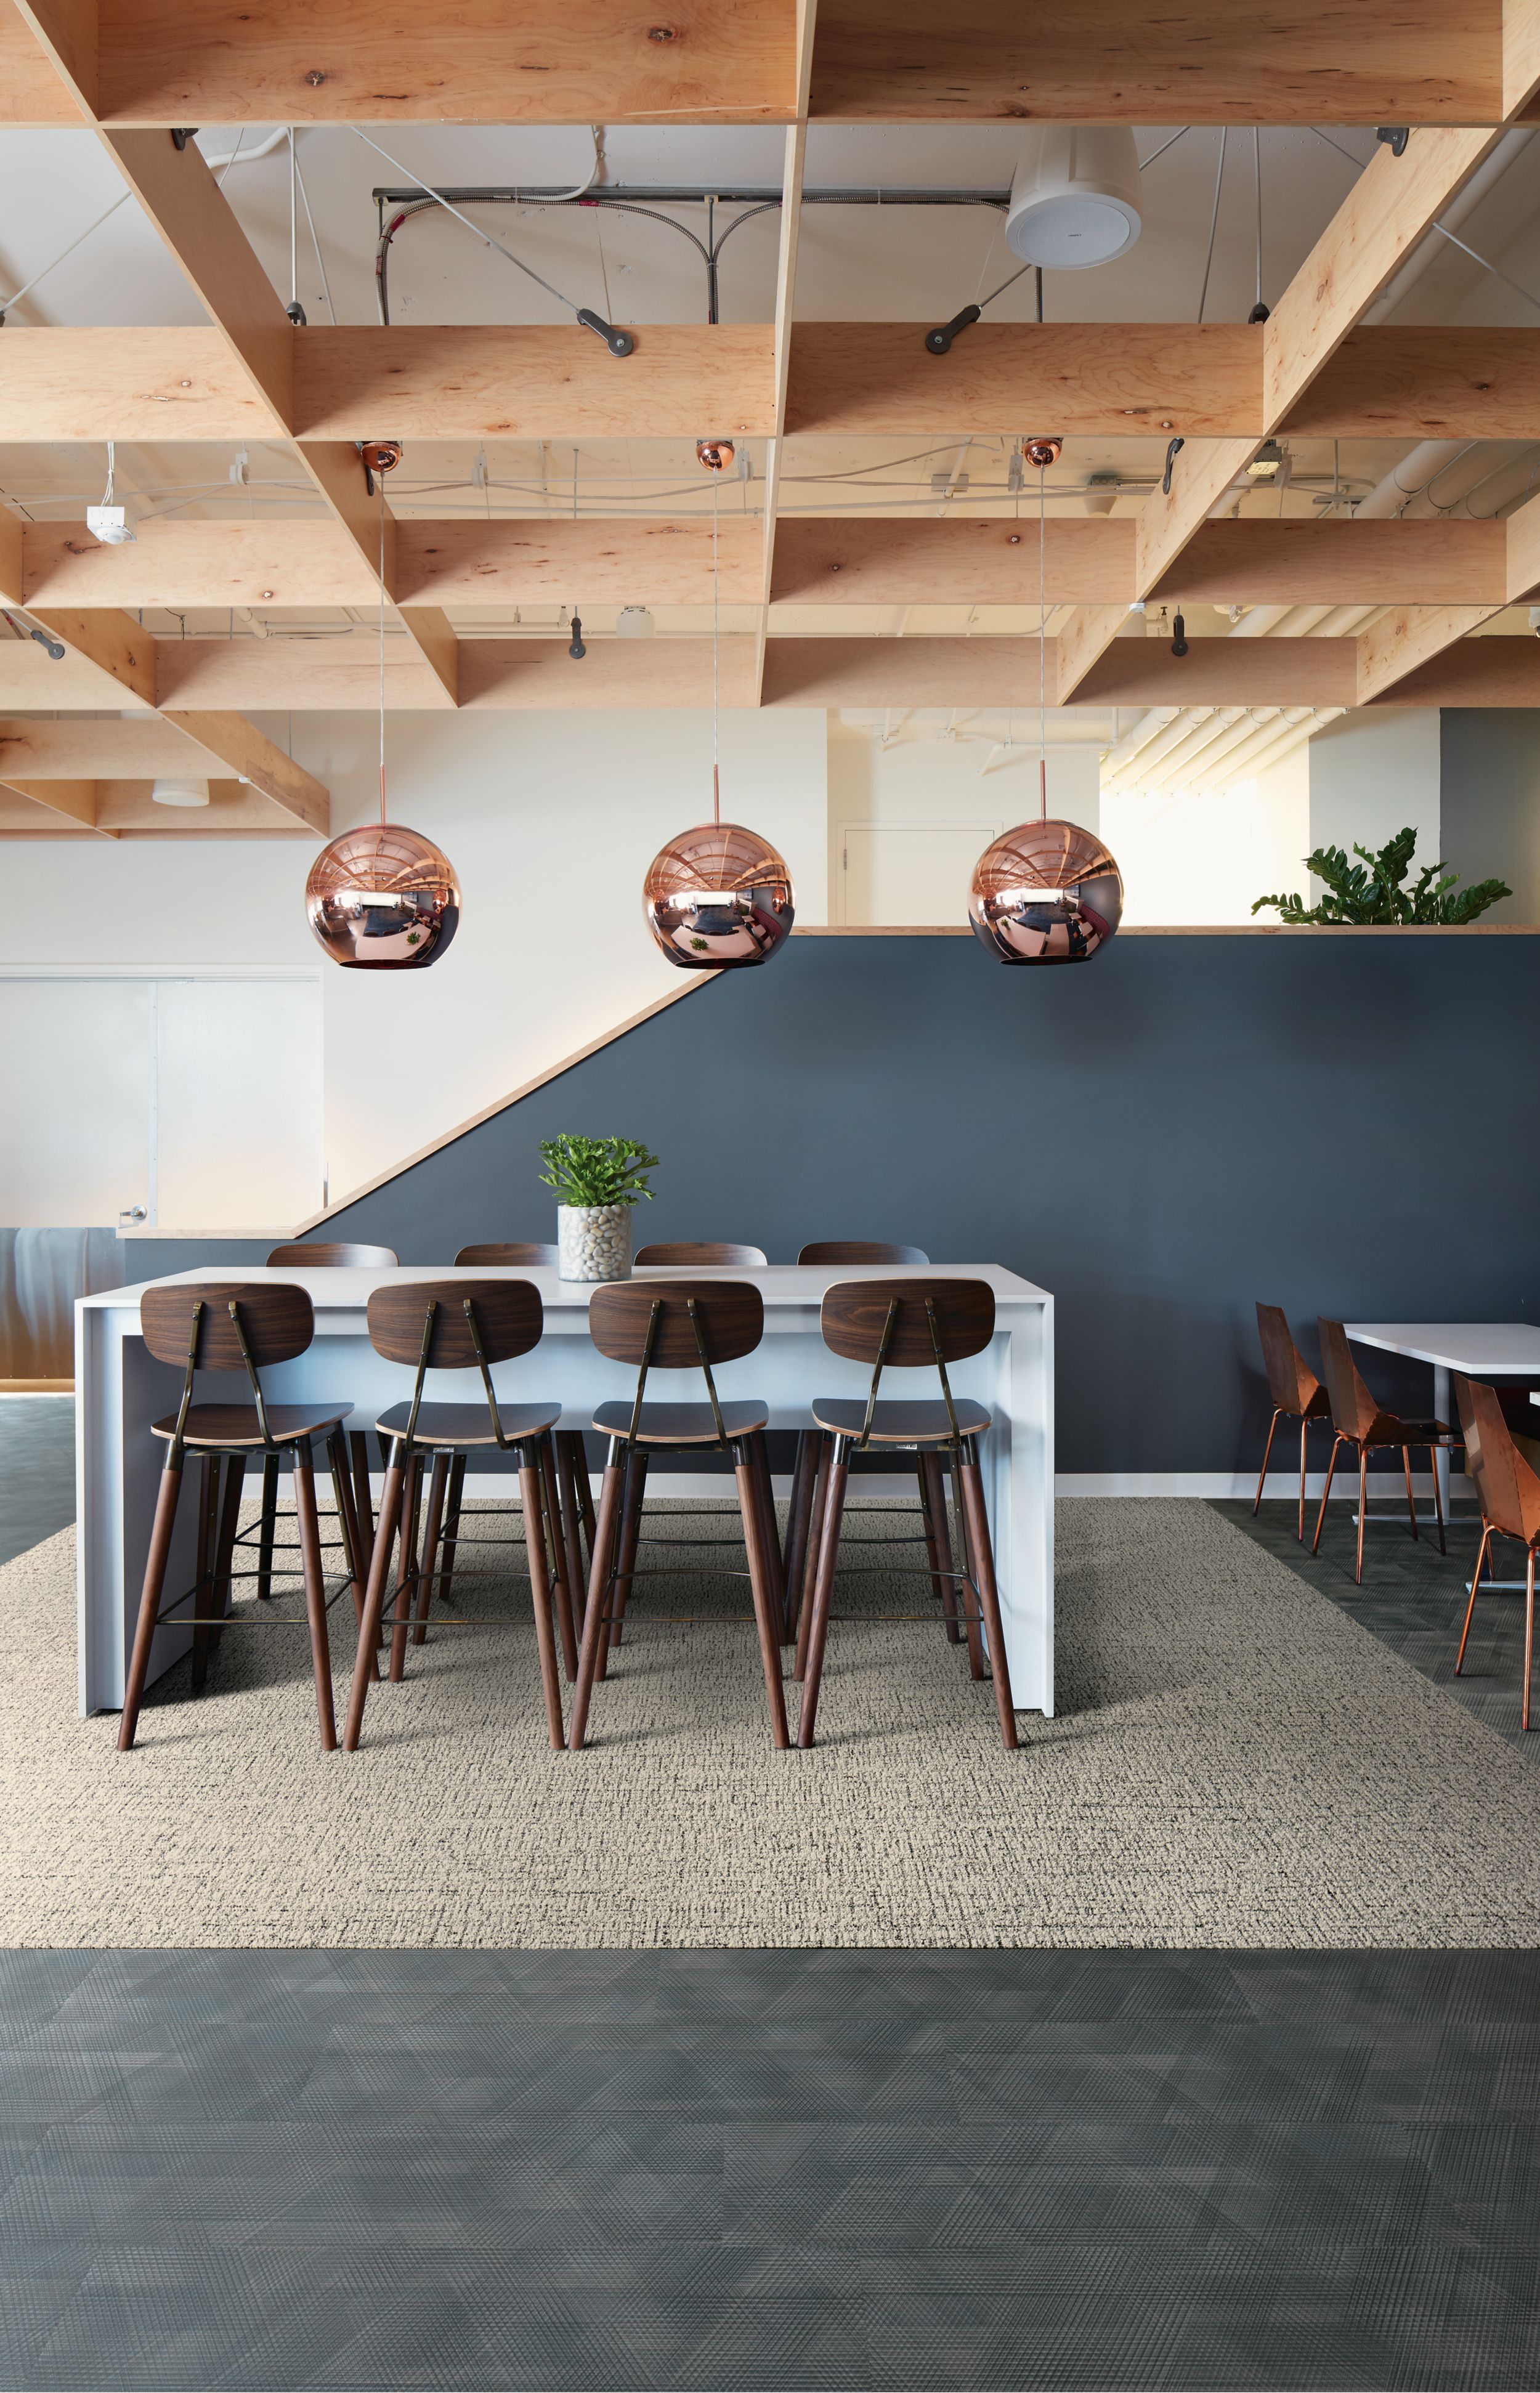 Interface Haptic plank carpet tile and Drawn Lines LVT in public office space with wood grid ceiling número de imagen 2